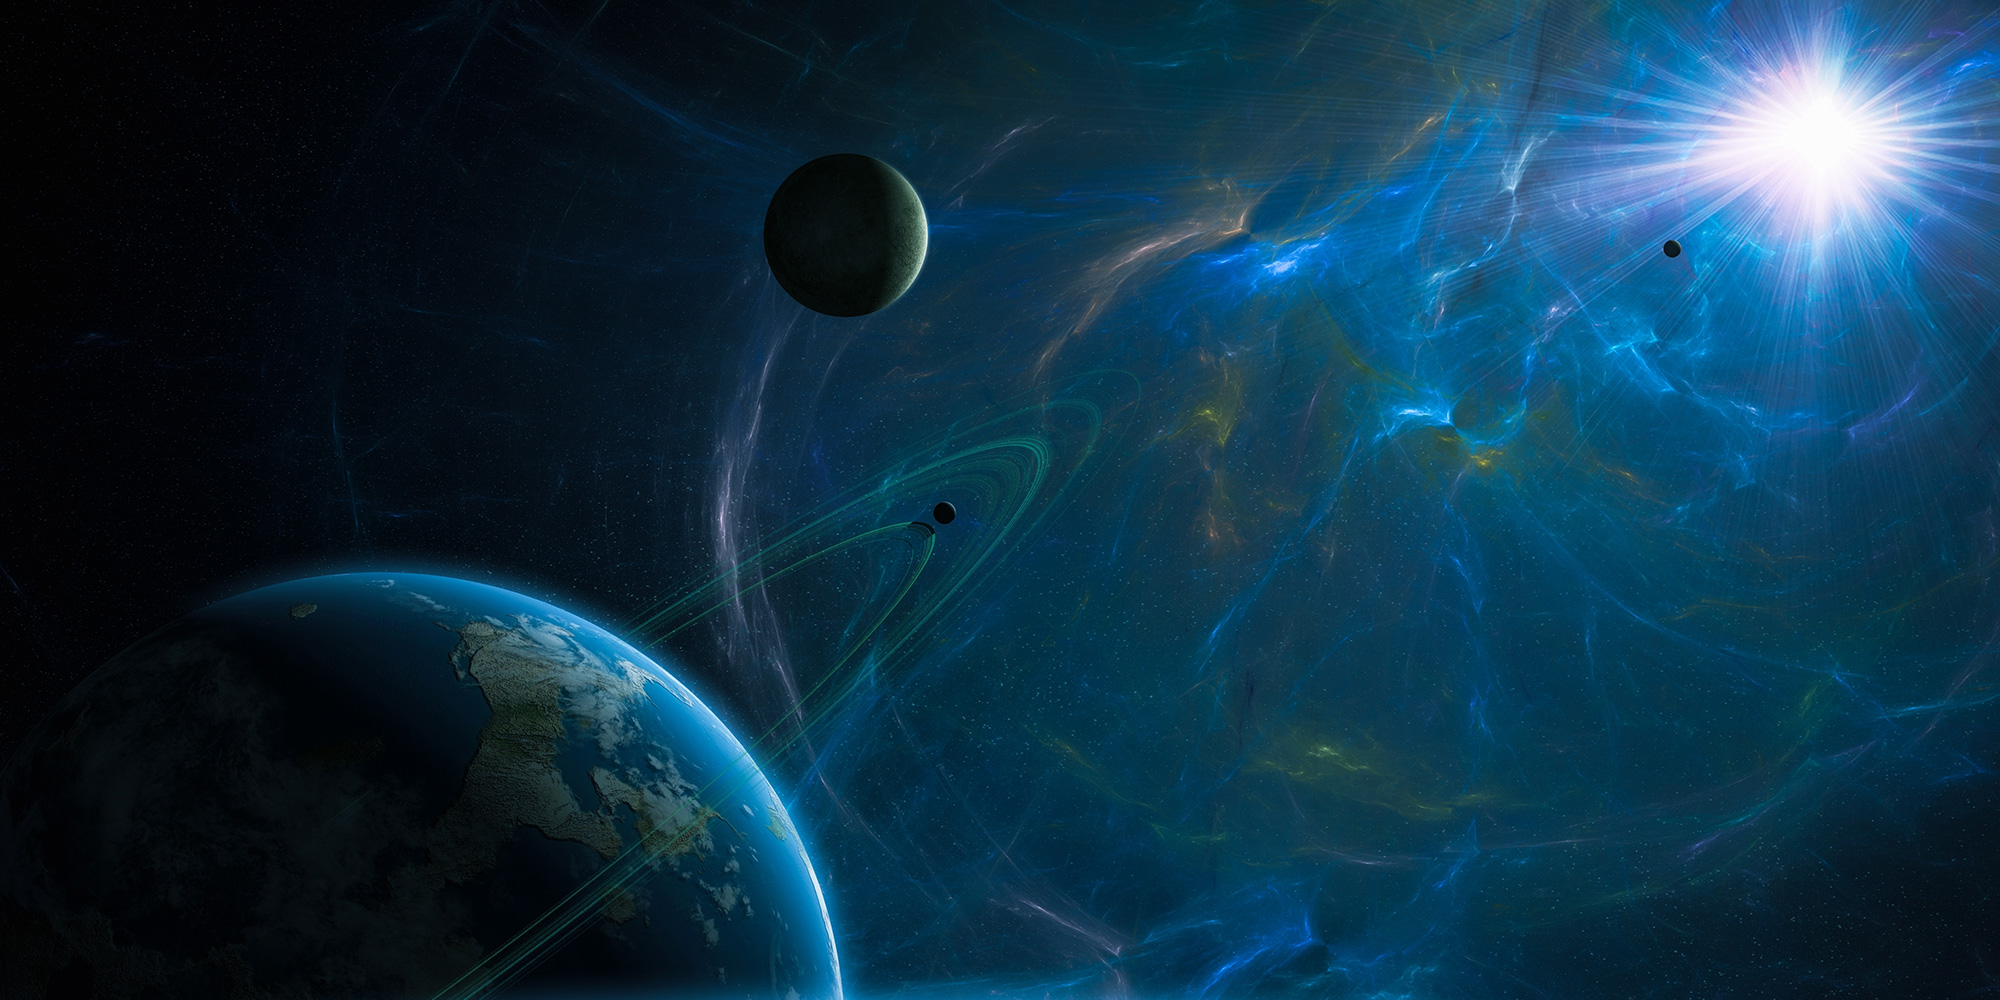 rendering of planets in deep space